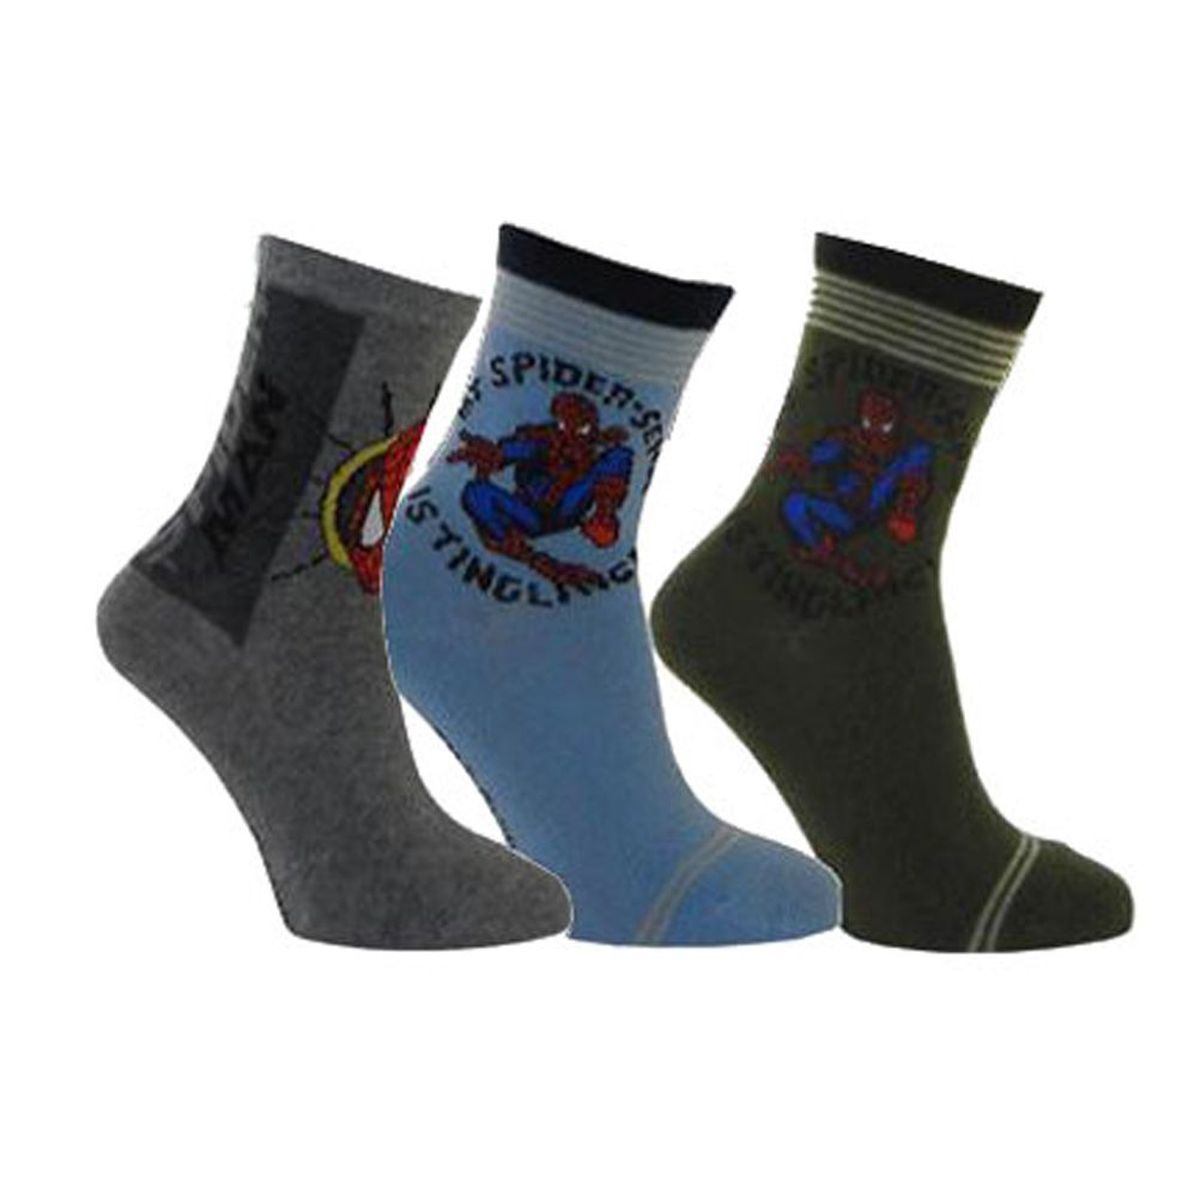 Spiderman 3 pairs of socks size 31-35